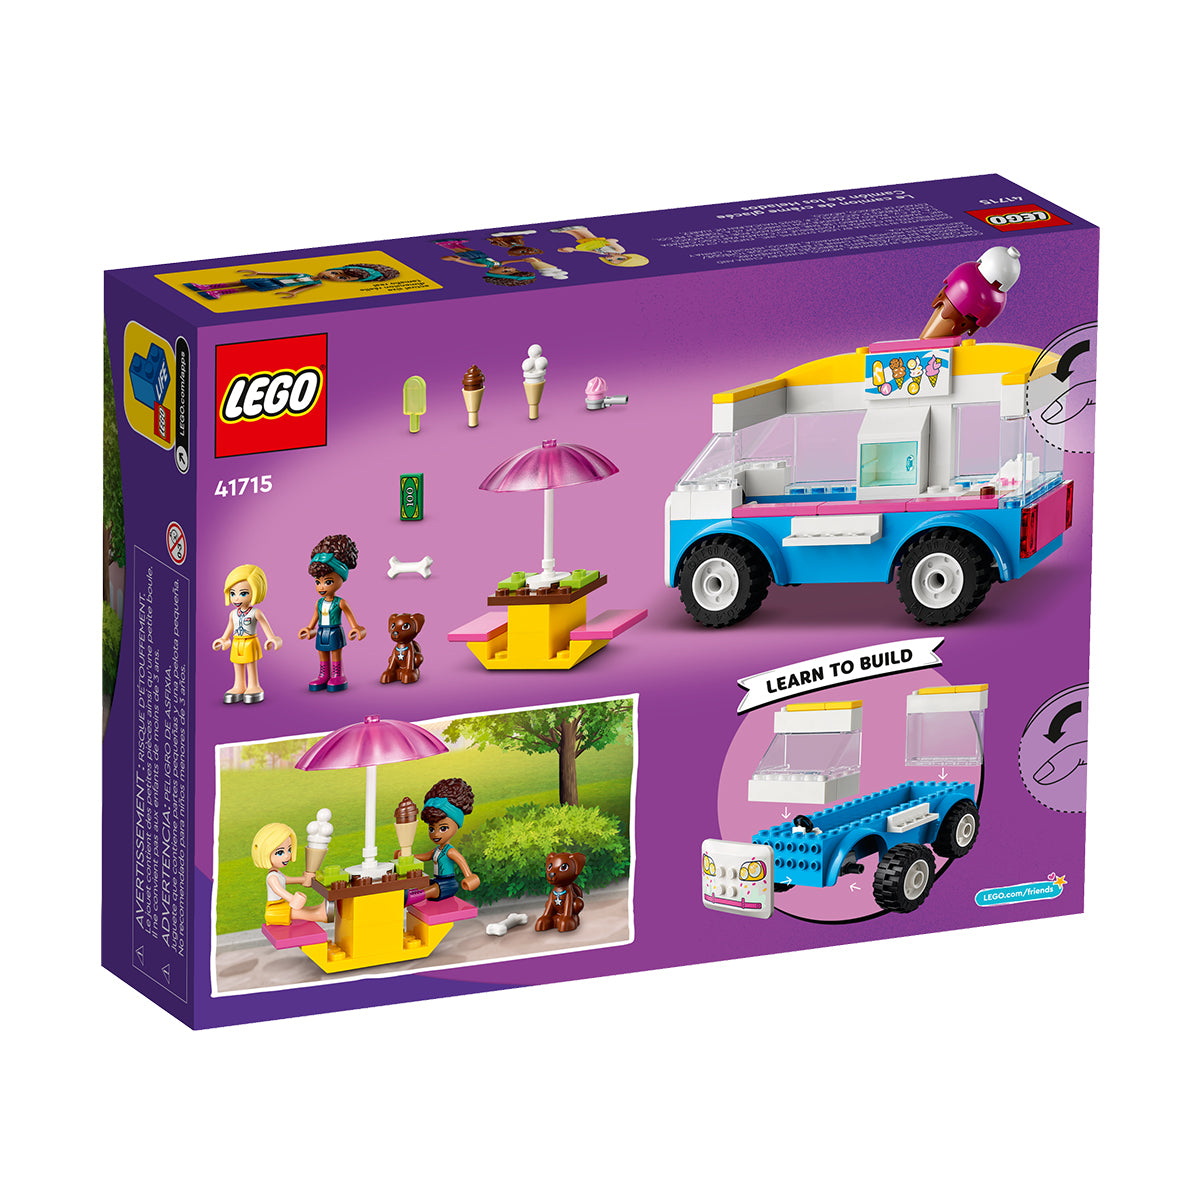 LEGO Friends - Ice-Cream Truck 41715